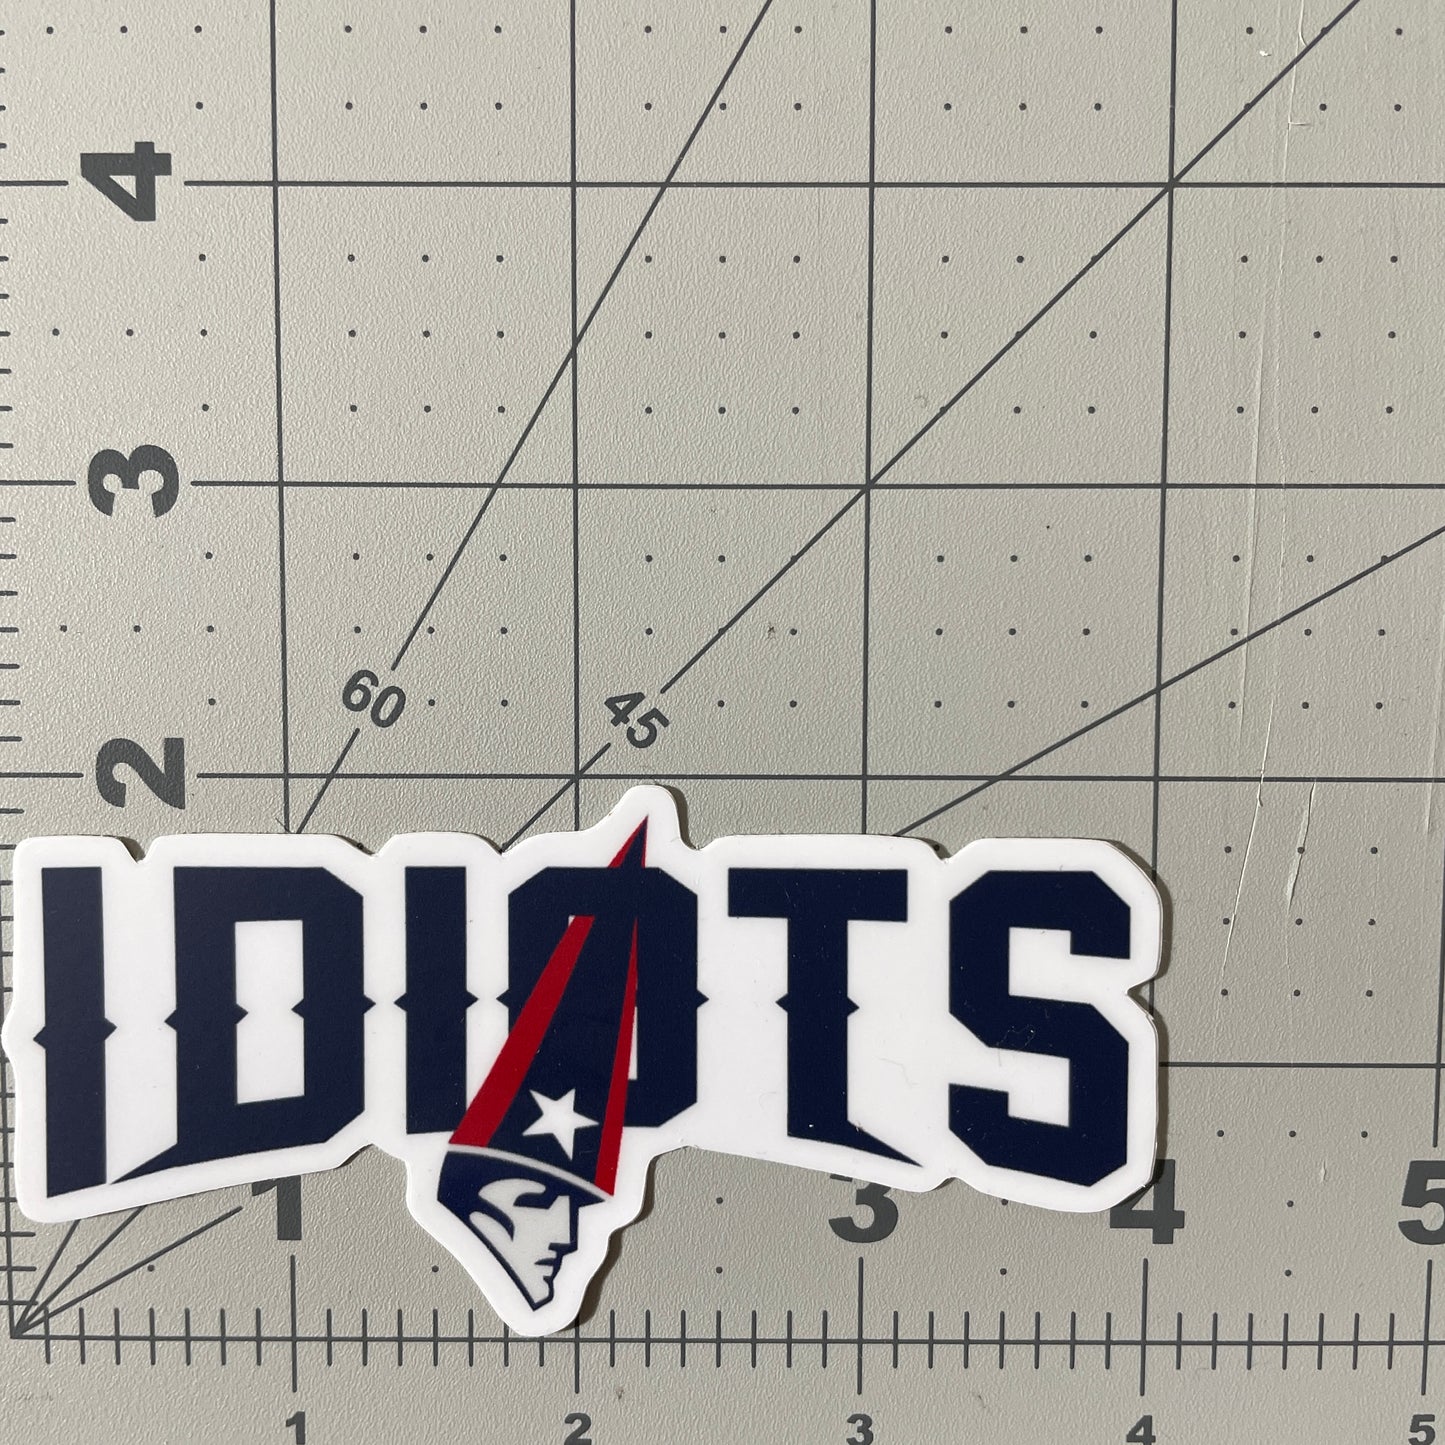 Idiots - New England Patriots funny parody NFL Sticker